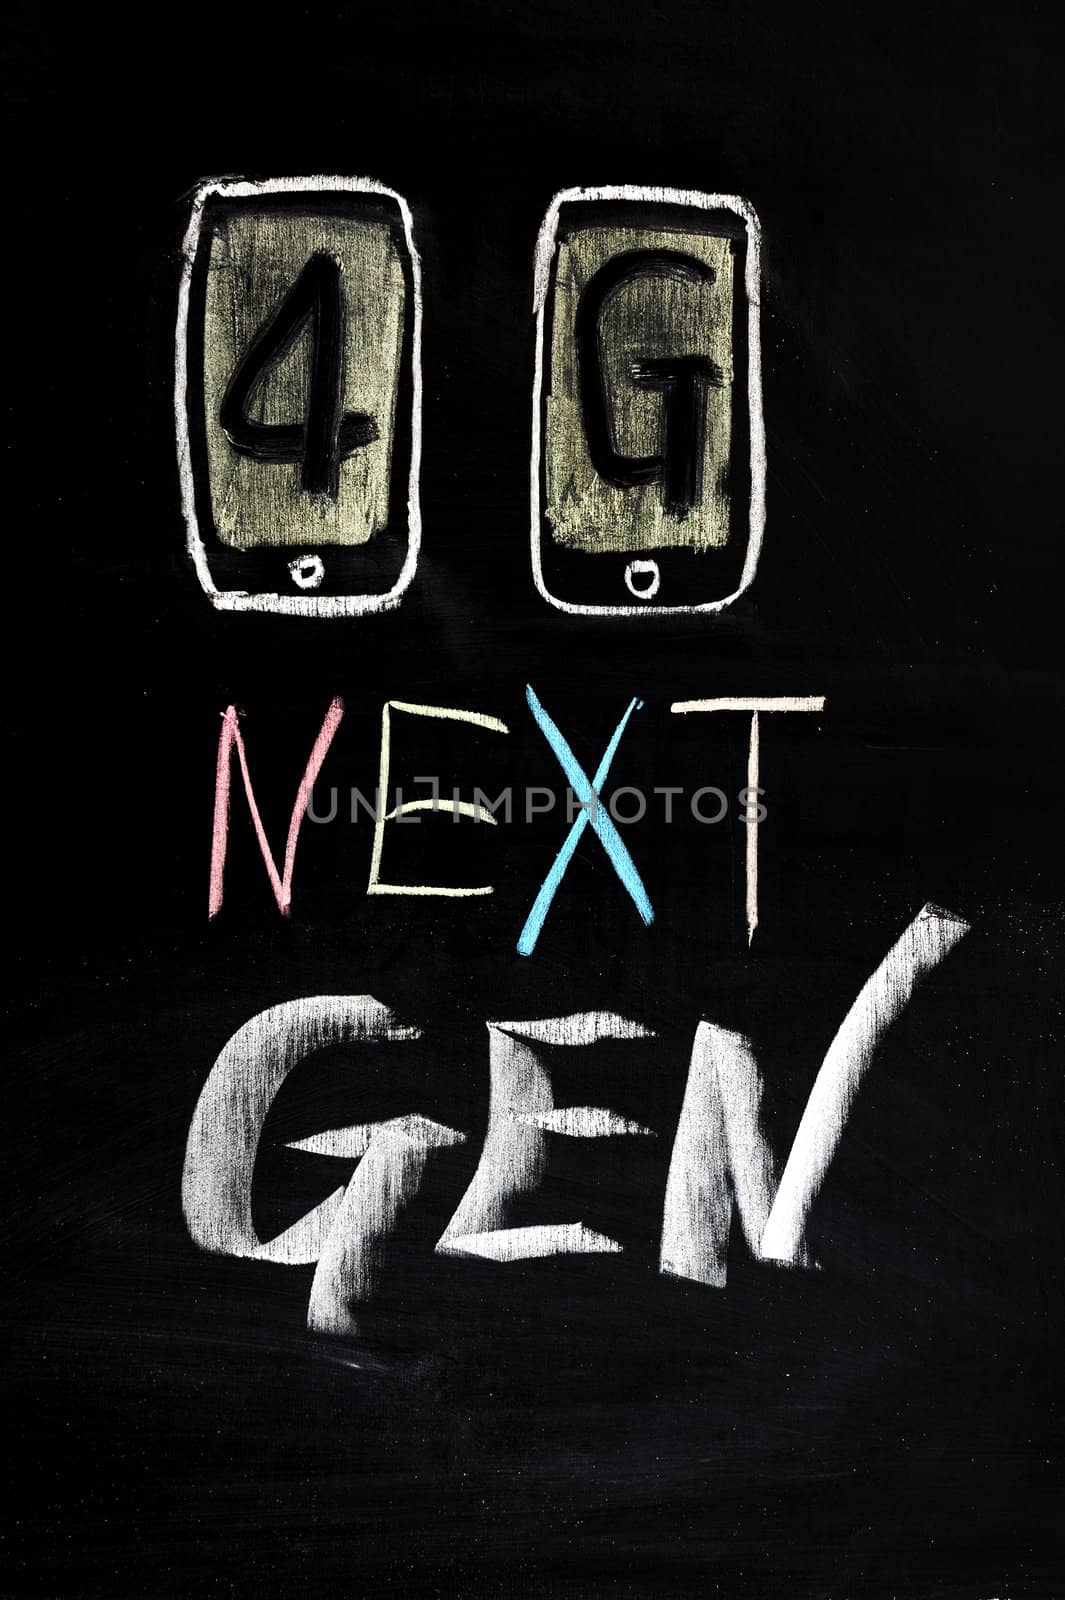 Chalk drawing - 4G, next generation mobile technology